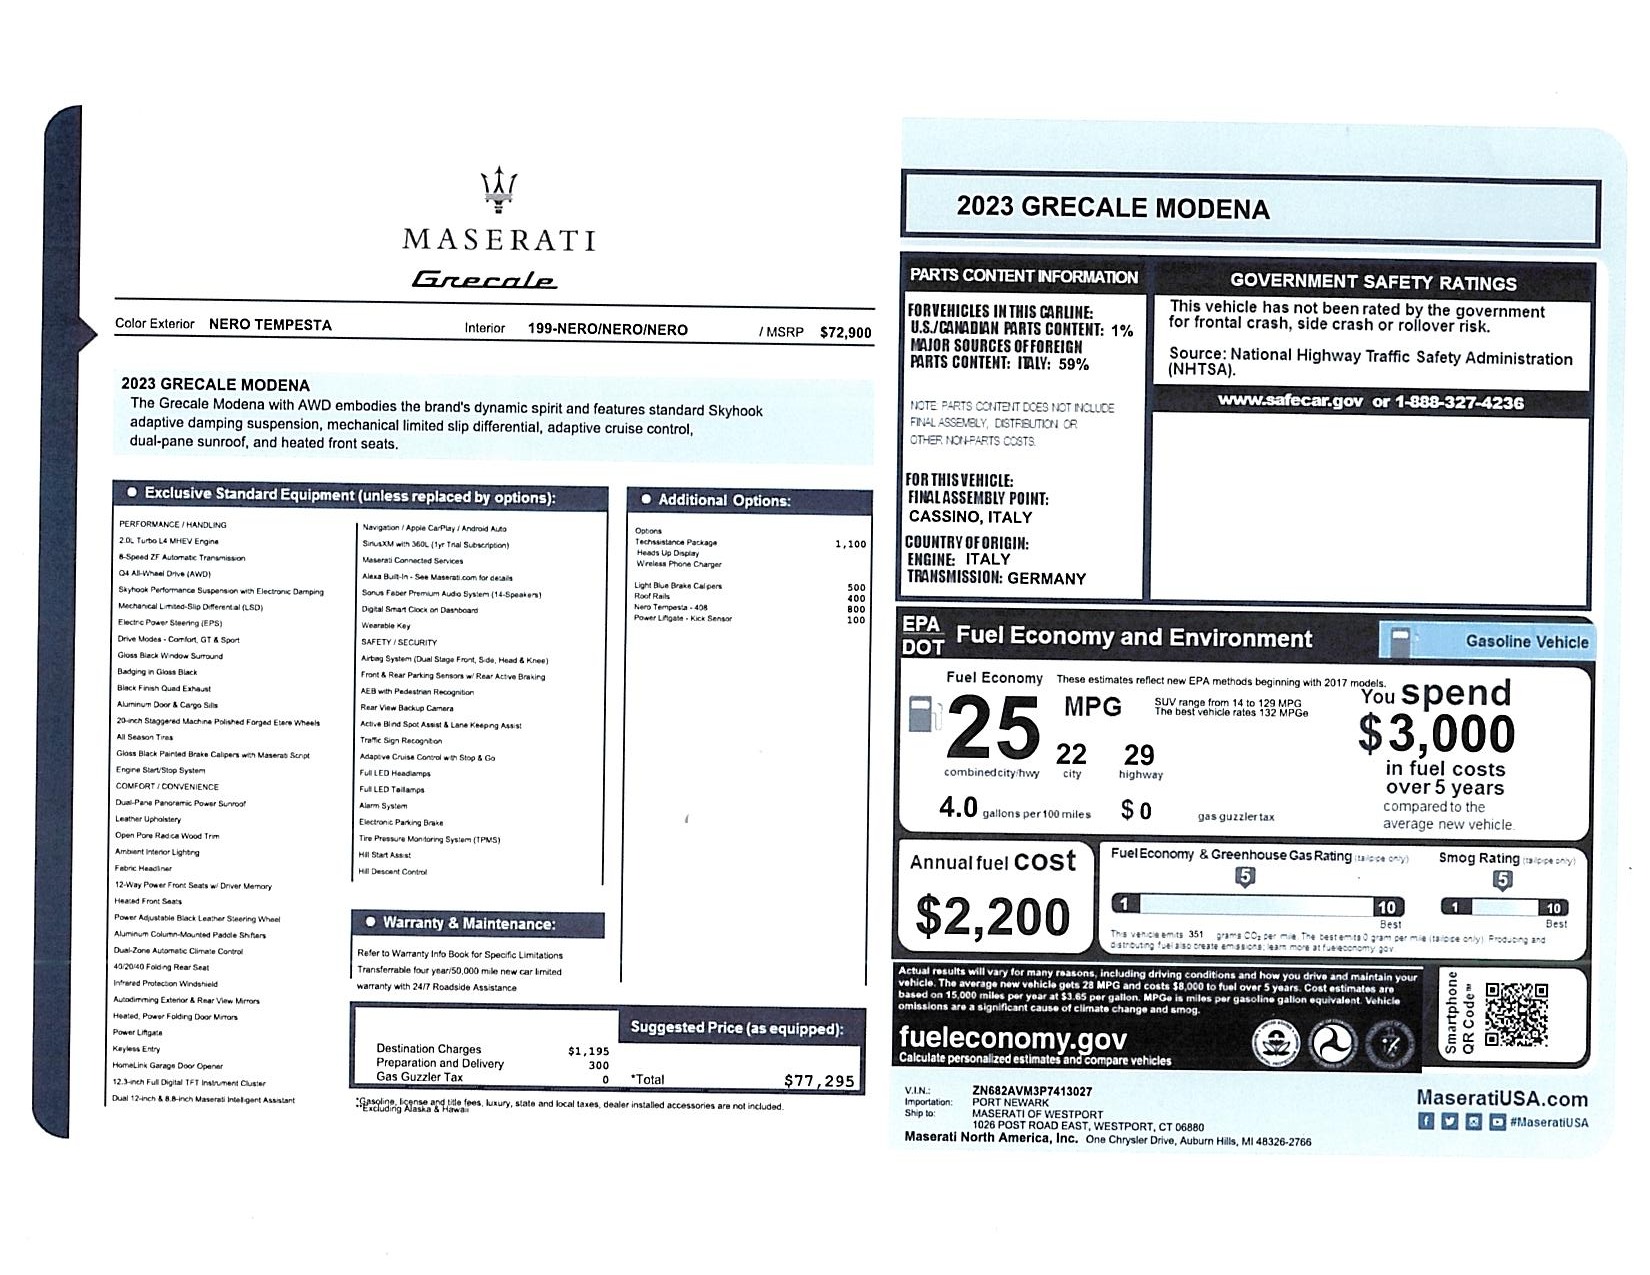 New 2023 Maserati Grecale Modena